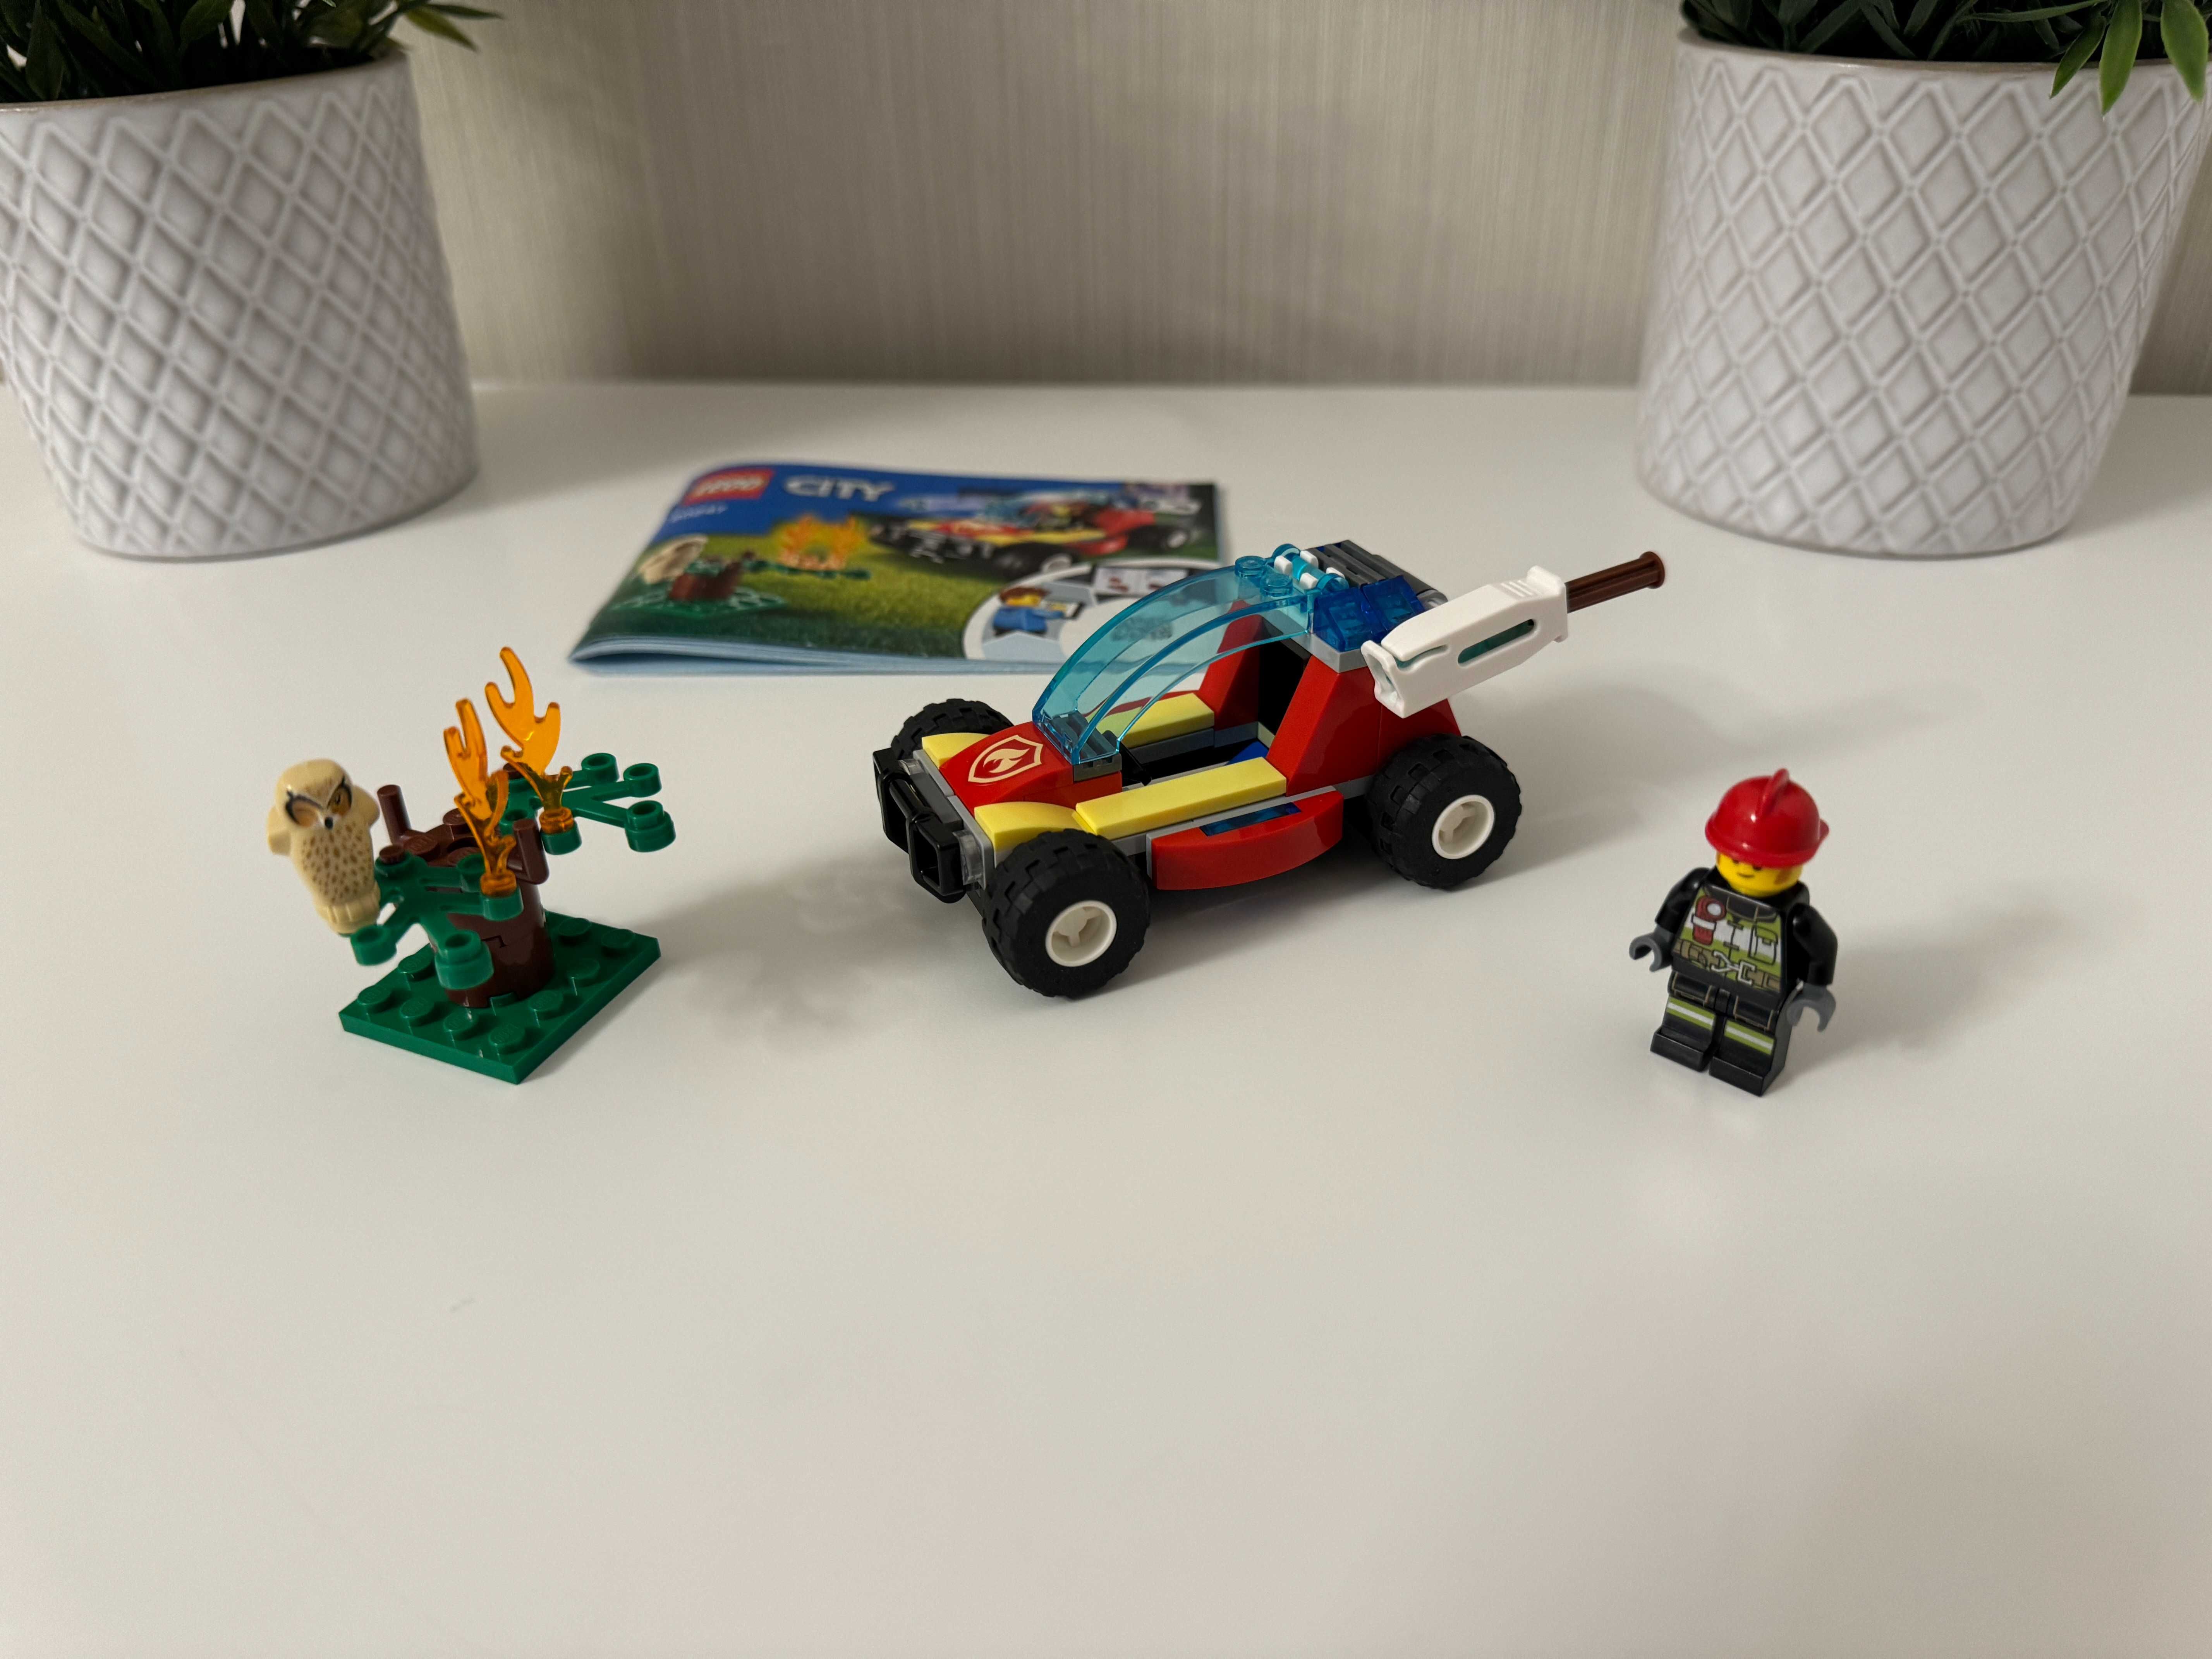 LEGO City Fire - Incendiu de padure 60247, 84 piese